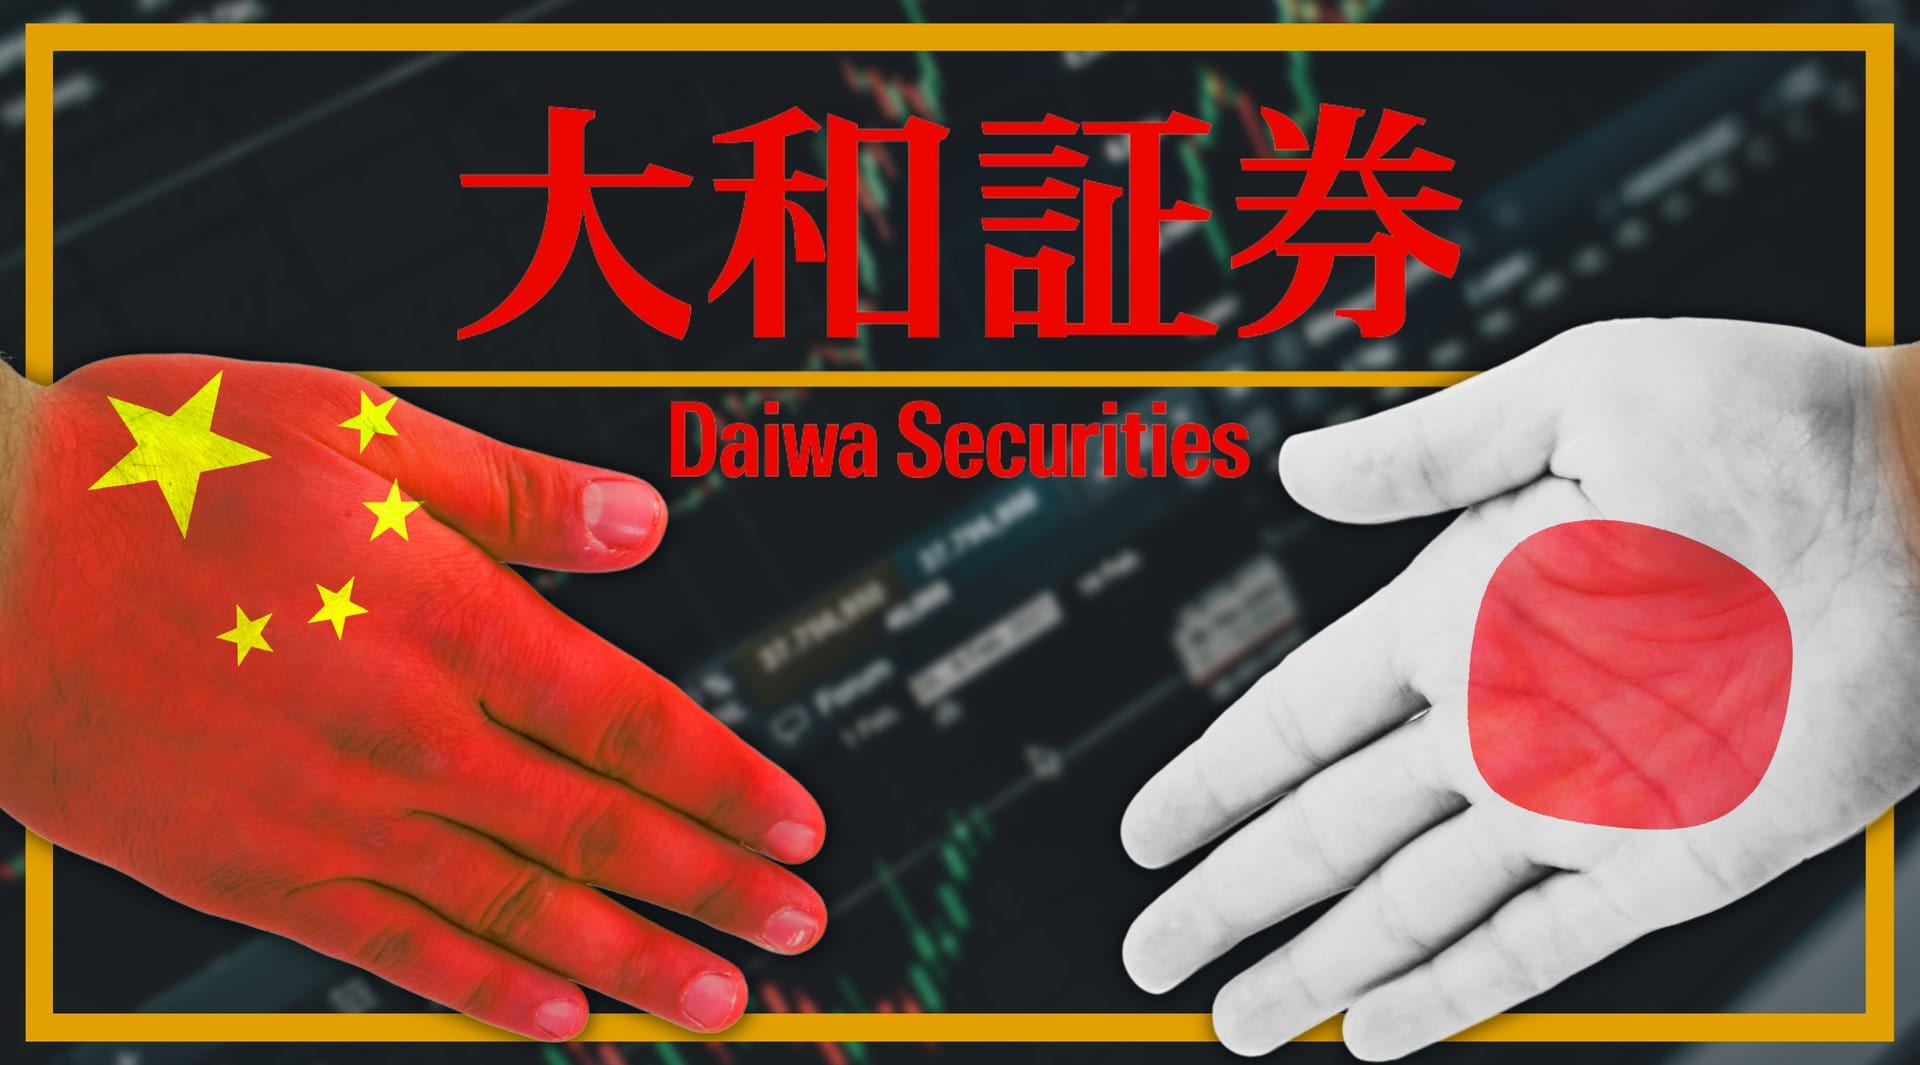 Daiwa Securities: a gateway to China's capital markets